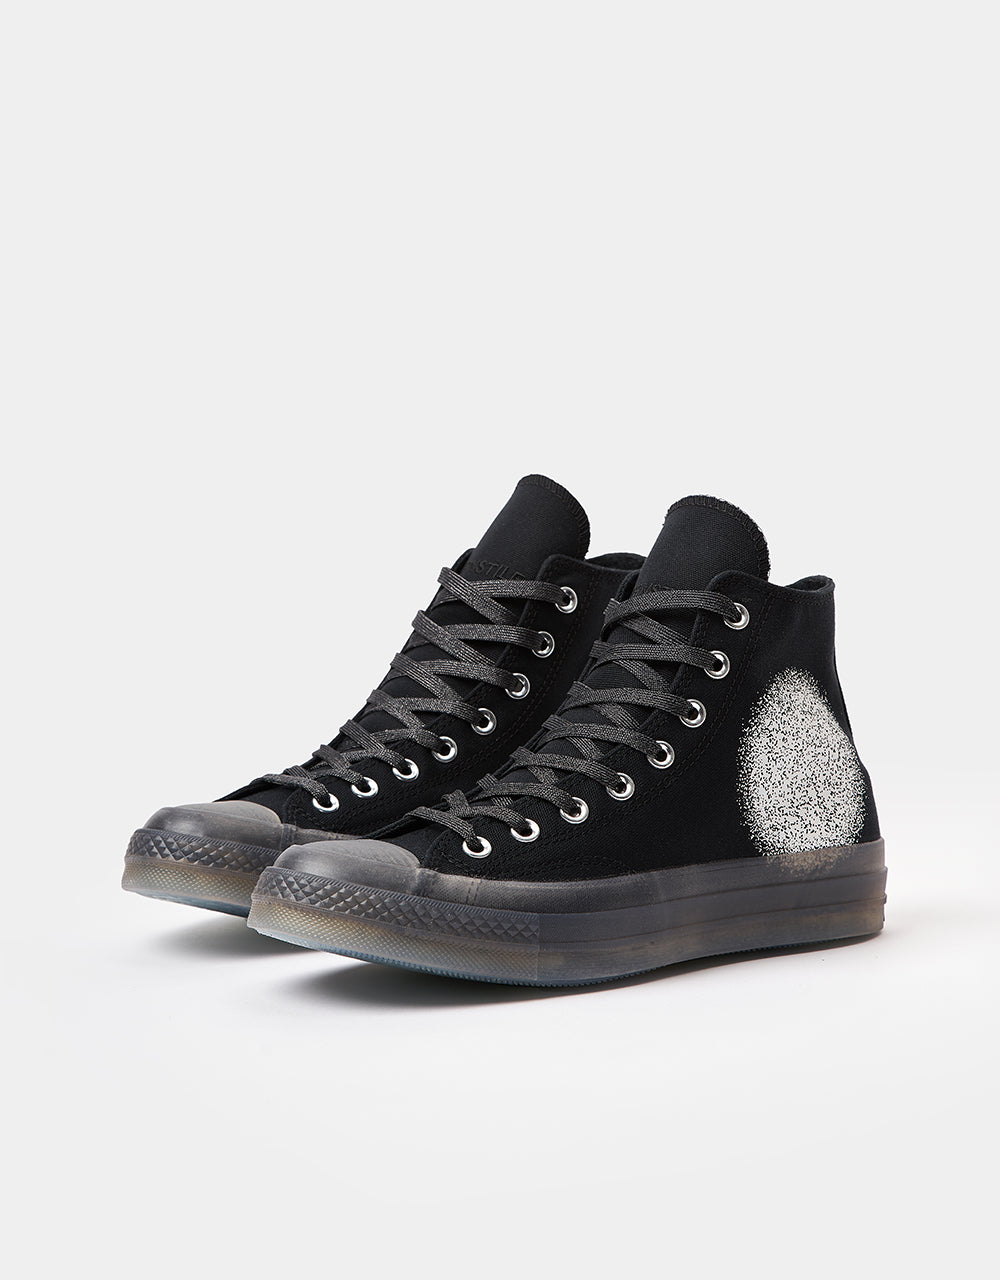 Converse x Turnstile Chuck 70s Skate Shoes - Black/Grey/White